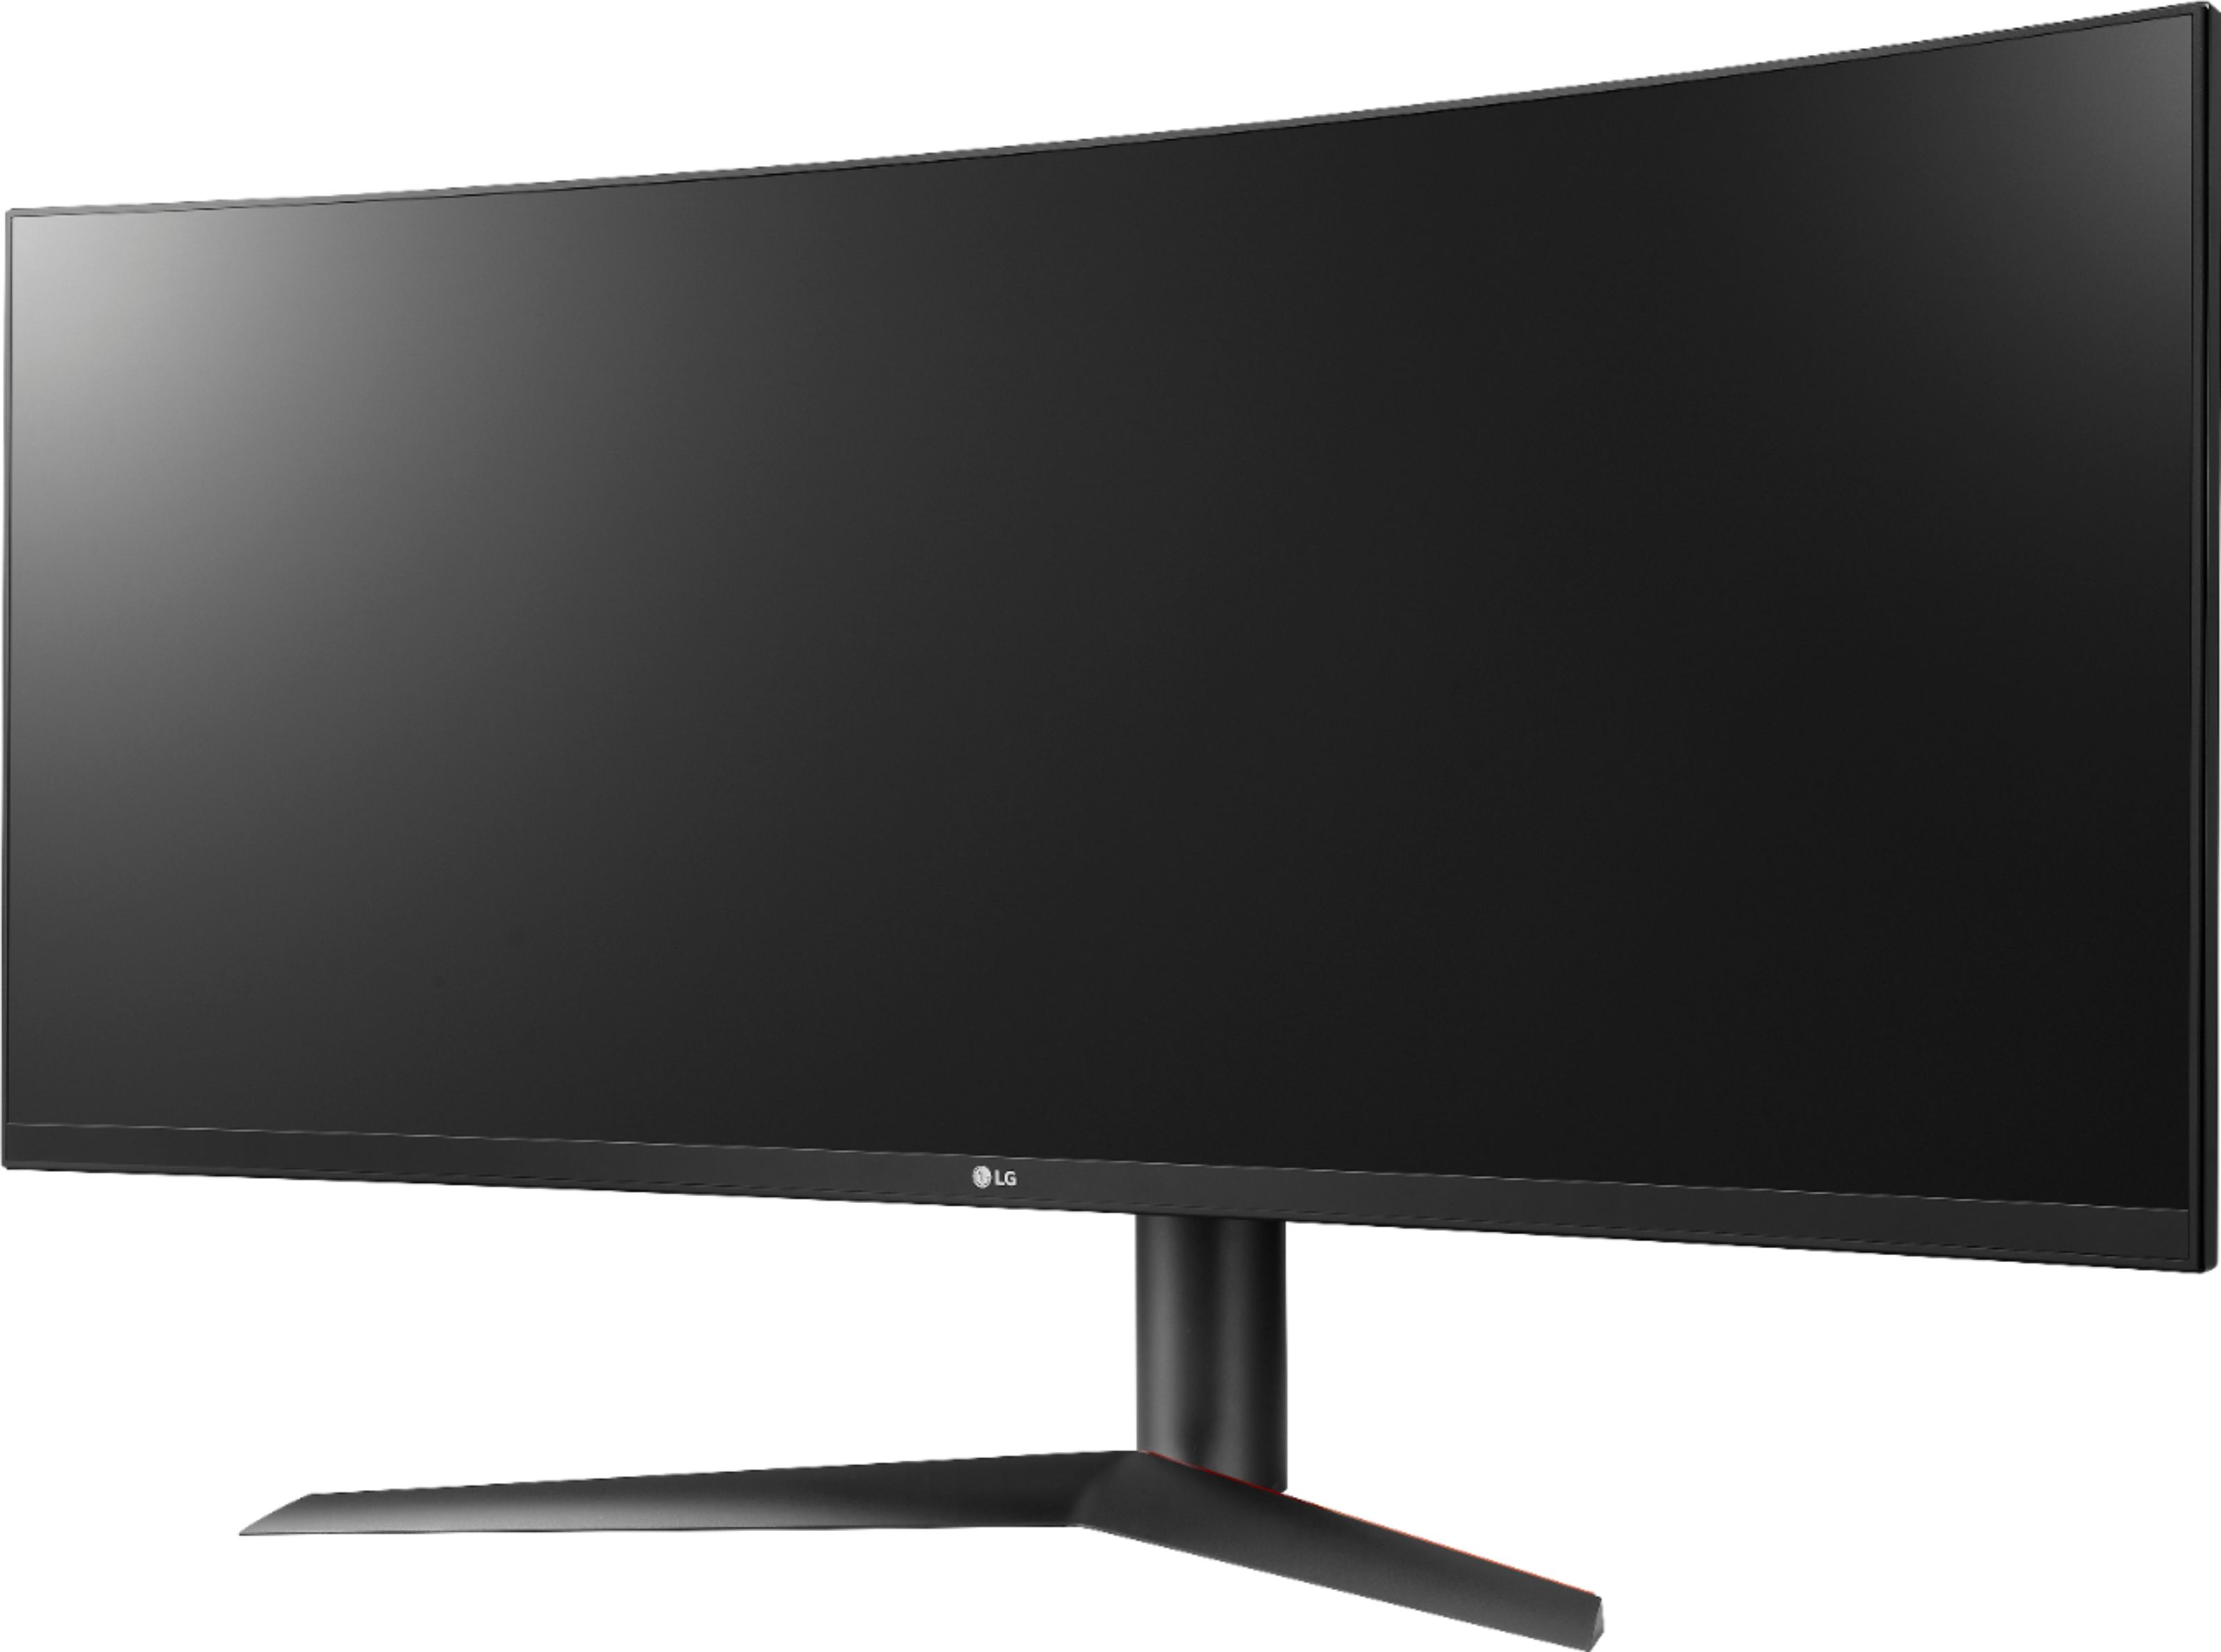 Left View: Dell P2419HC Widescreen LCD Monitor - Black - Black